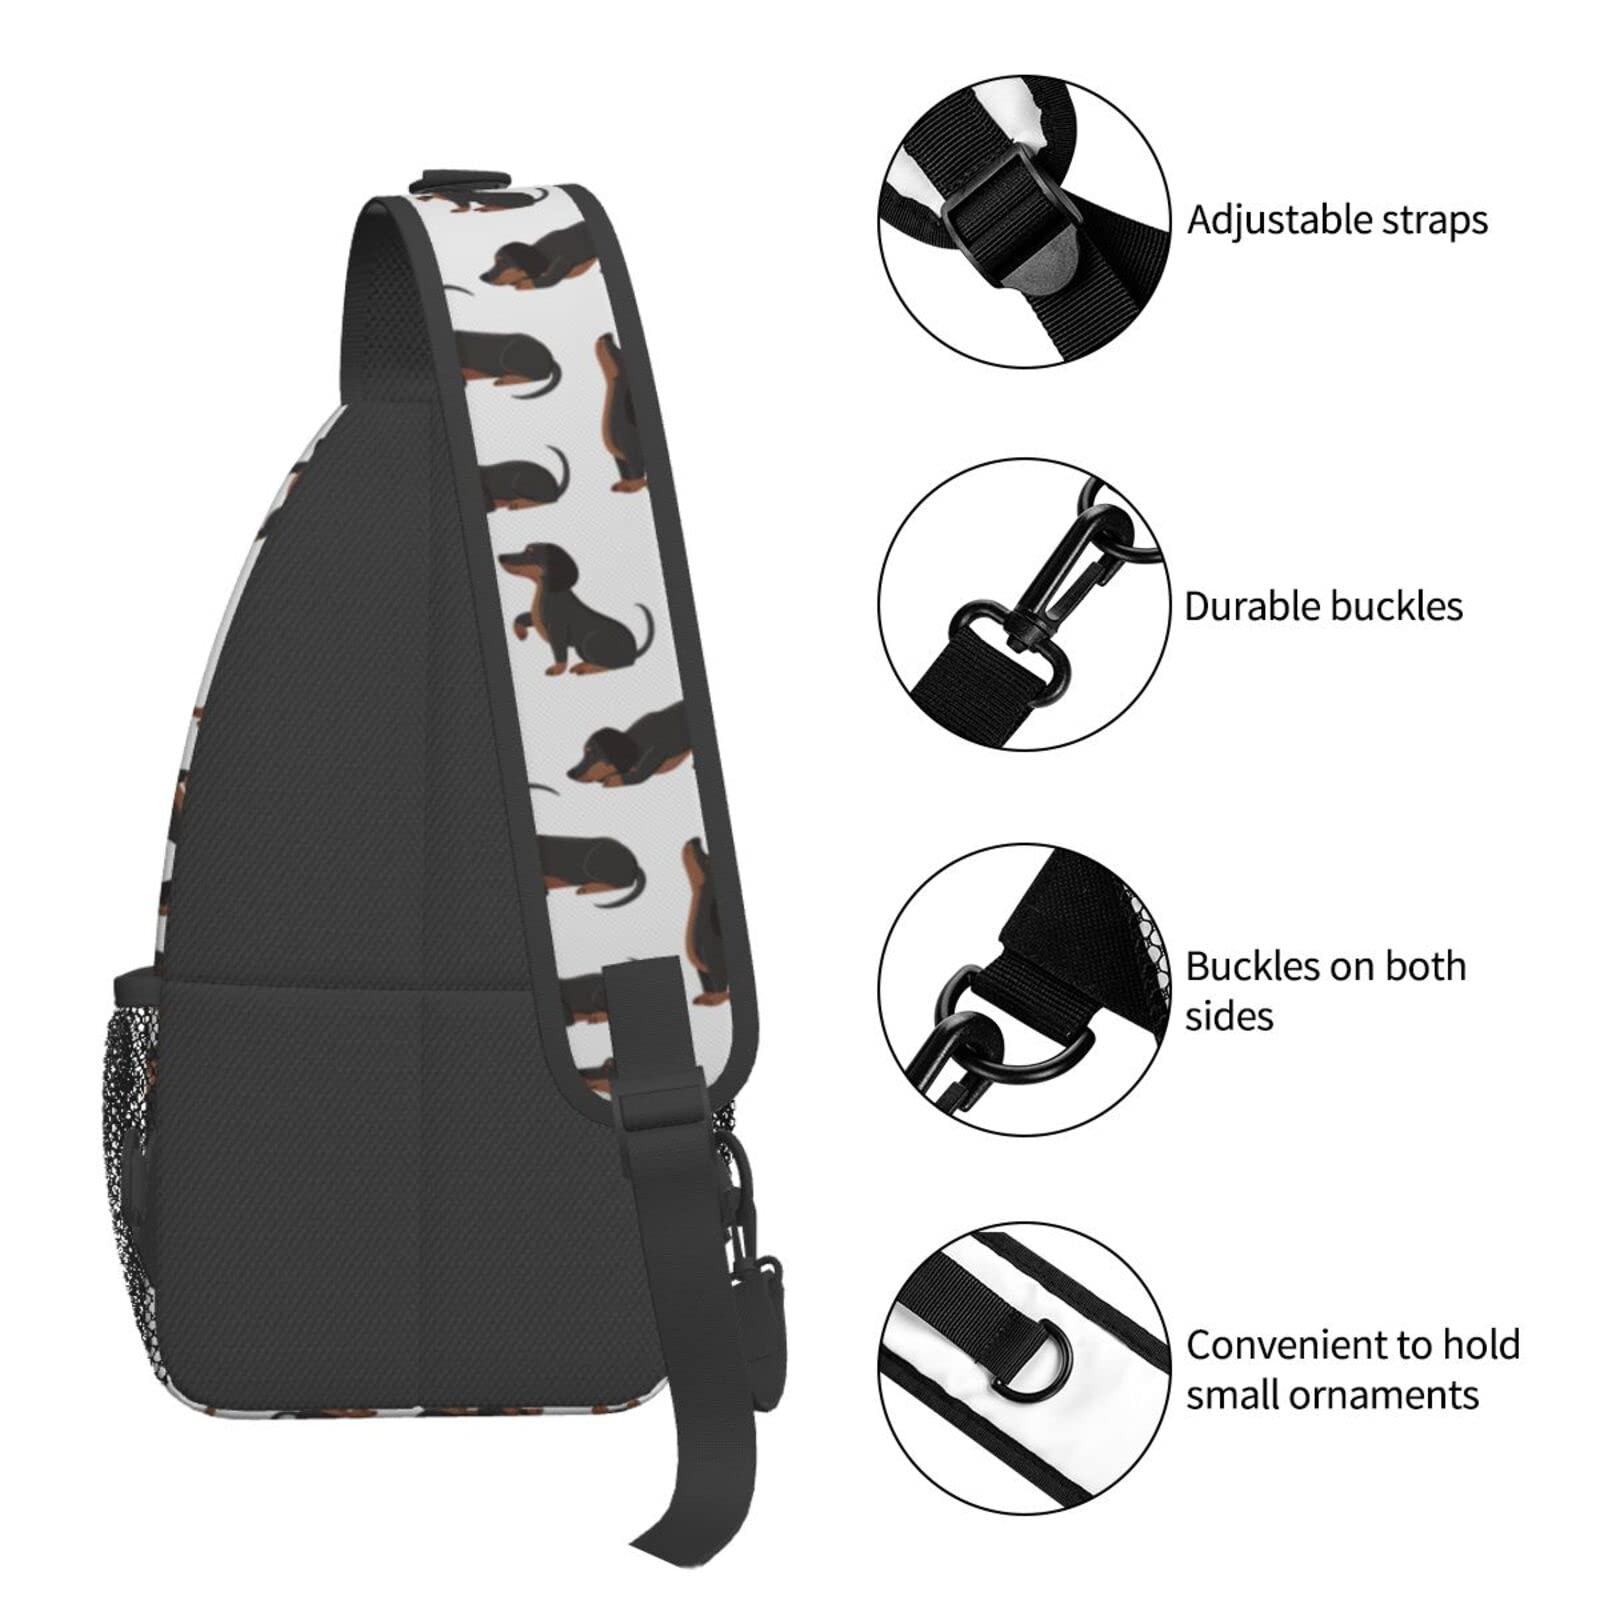 Yrebyou Dachshund Dog Sling Bag Casual Crossbody Backpack Travel Hiking Daypack for Women Men Lightweight Chest Purse Fashion Shoulder Bags traveling Runner Climbing